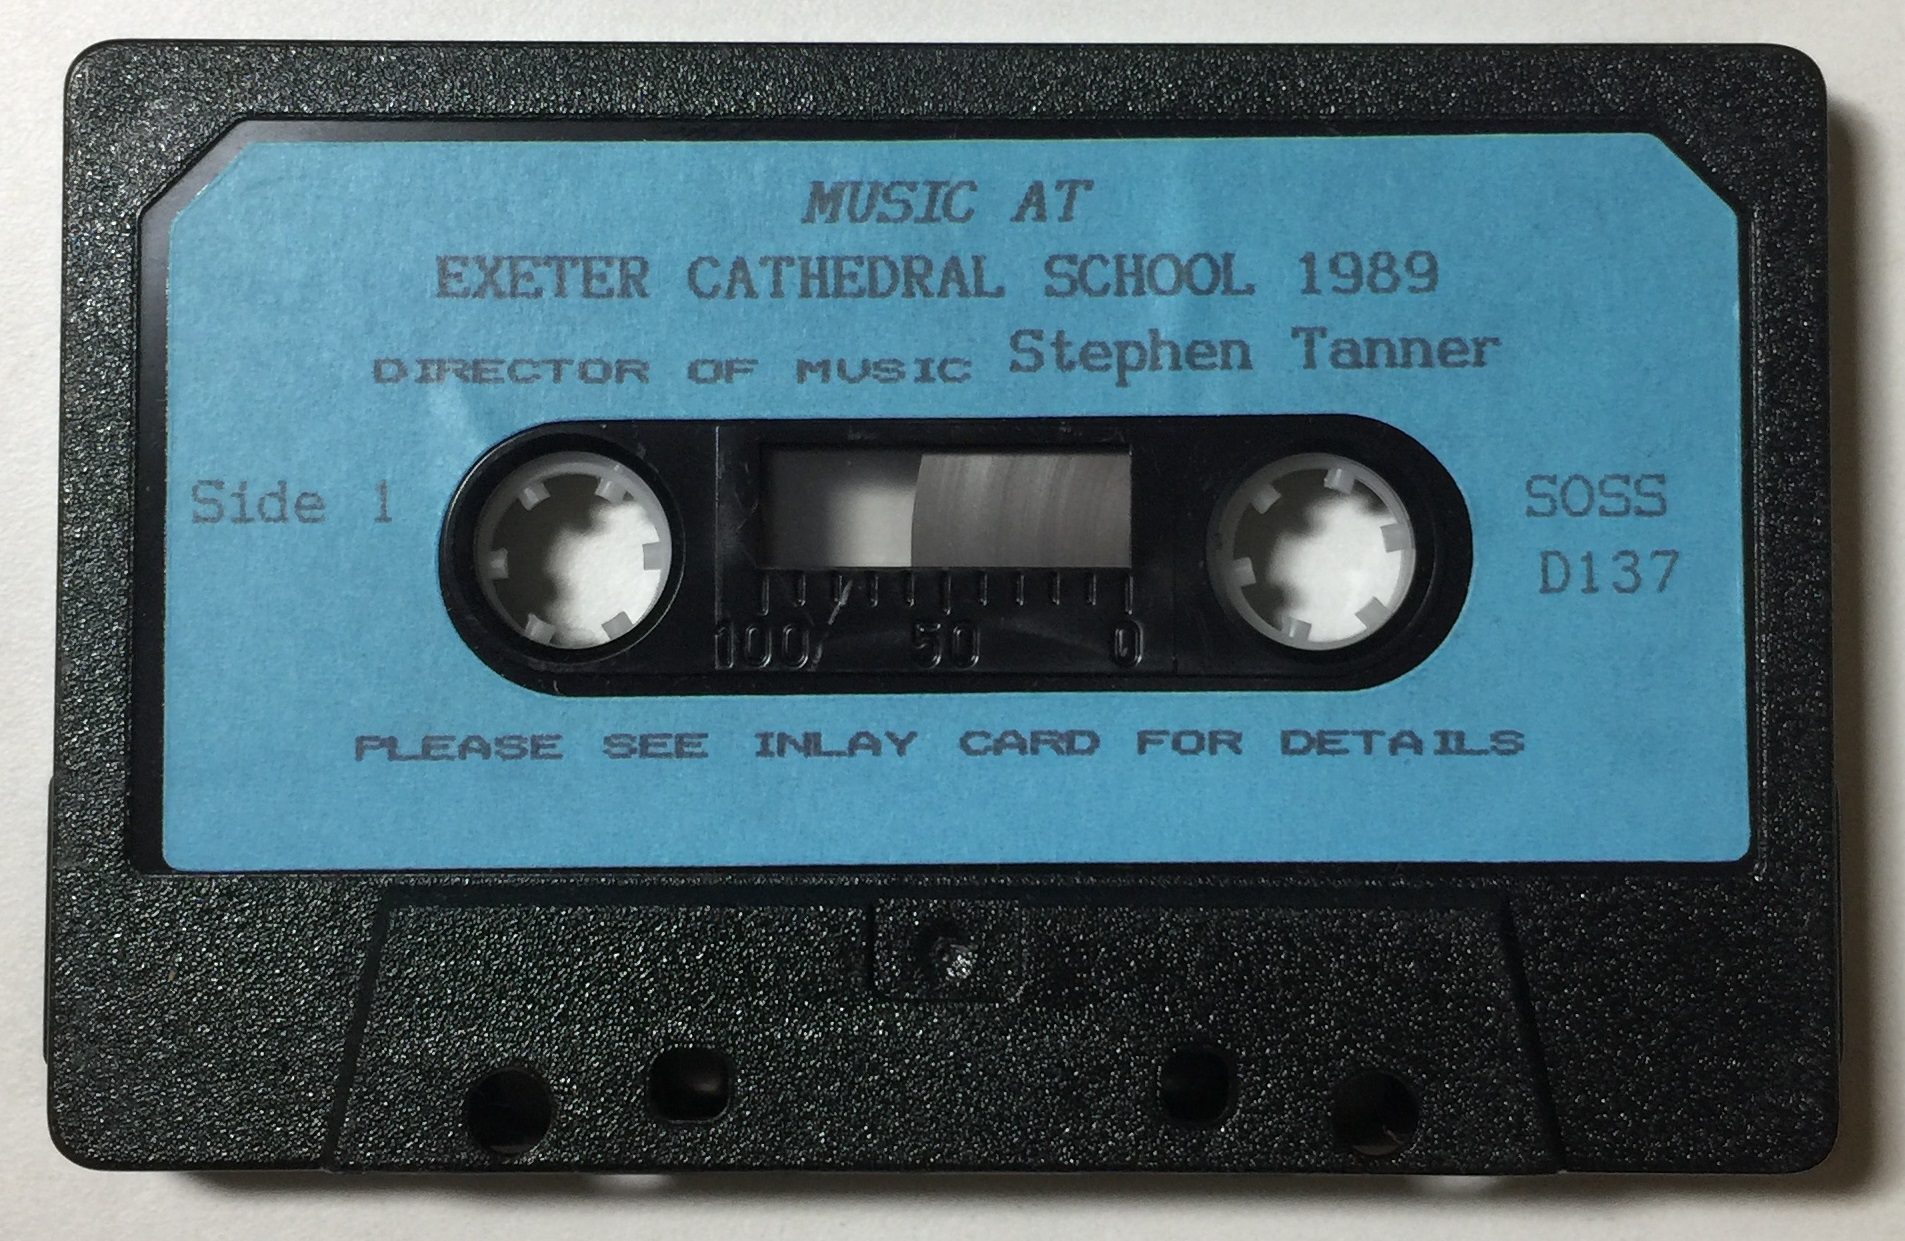 The cassette tape